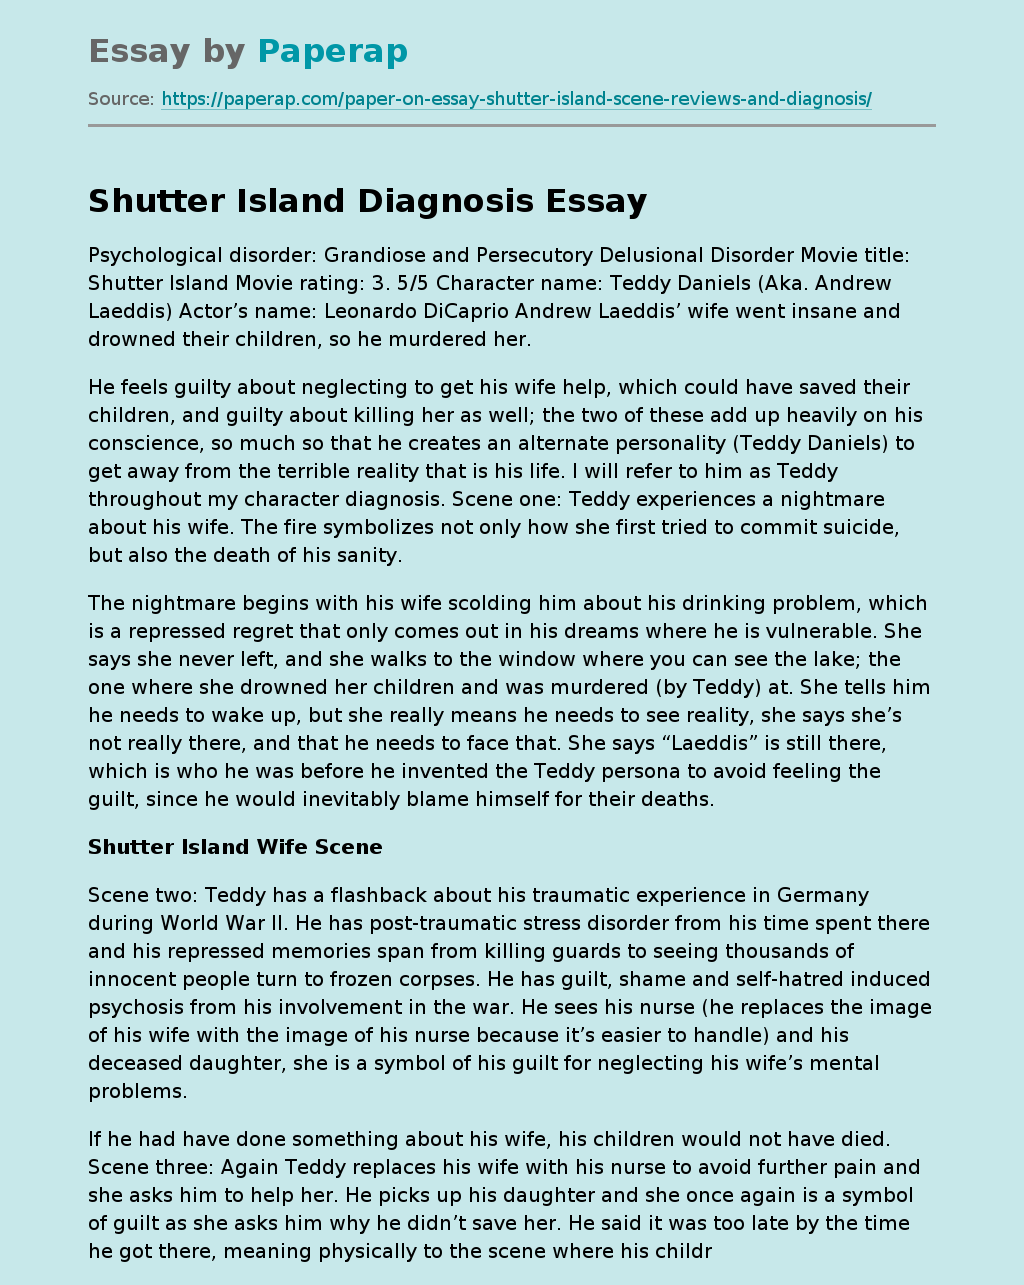 Shutter Island Diagnosis